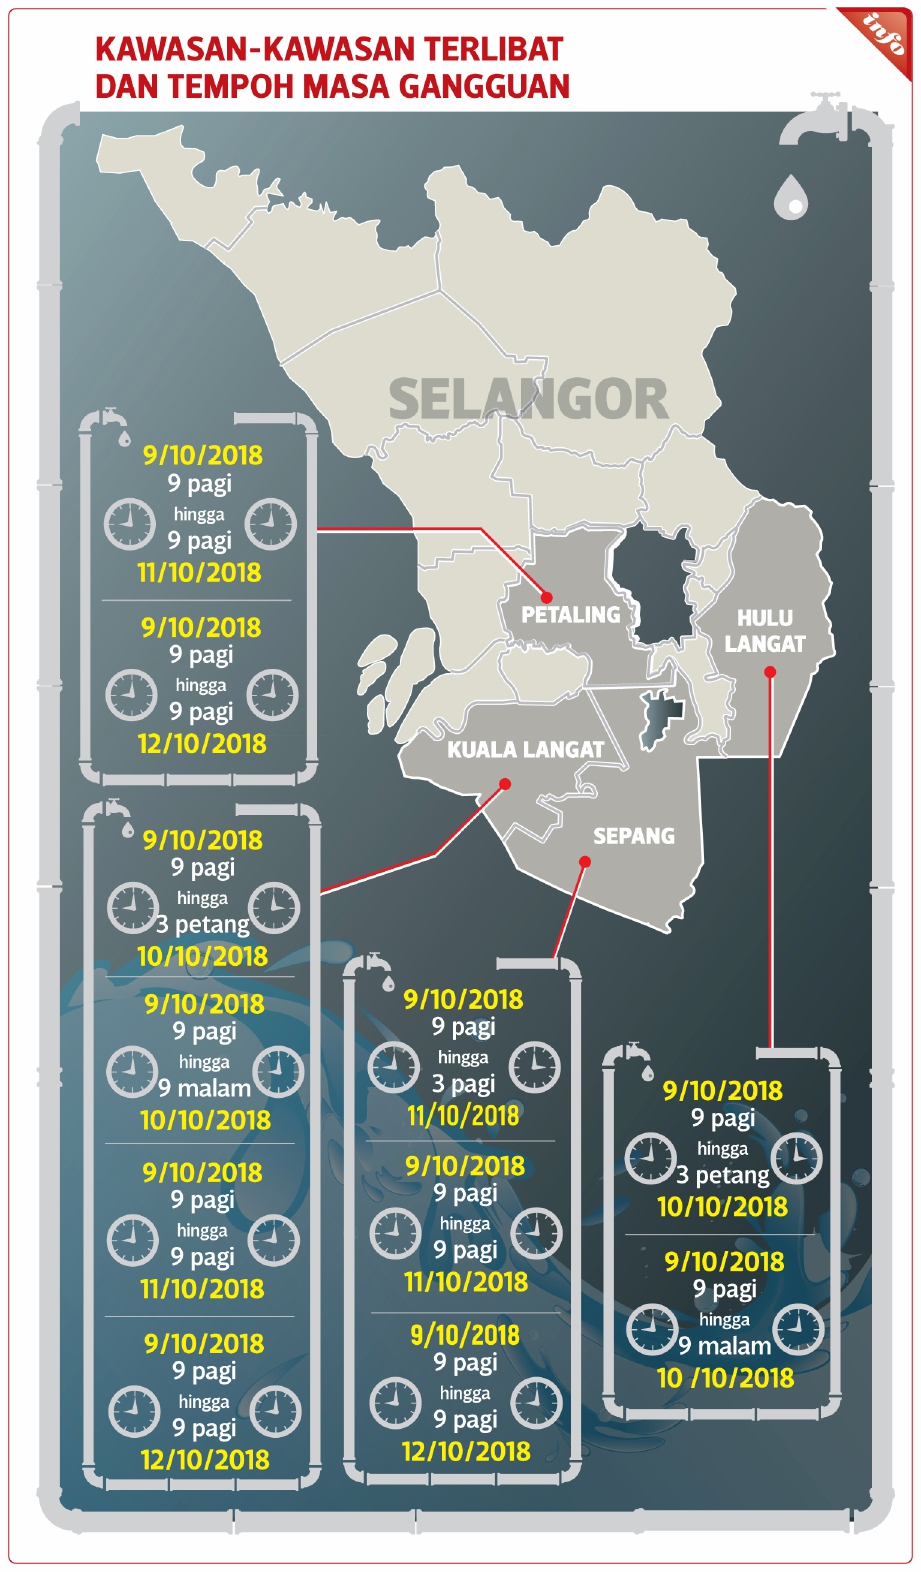 Rumah panjang identiti Sarawak  Harian Metro